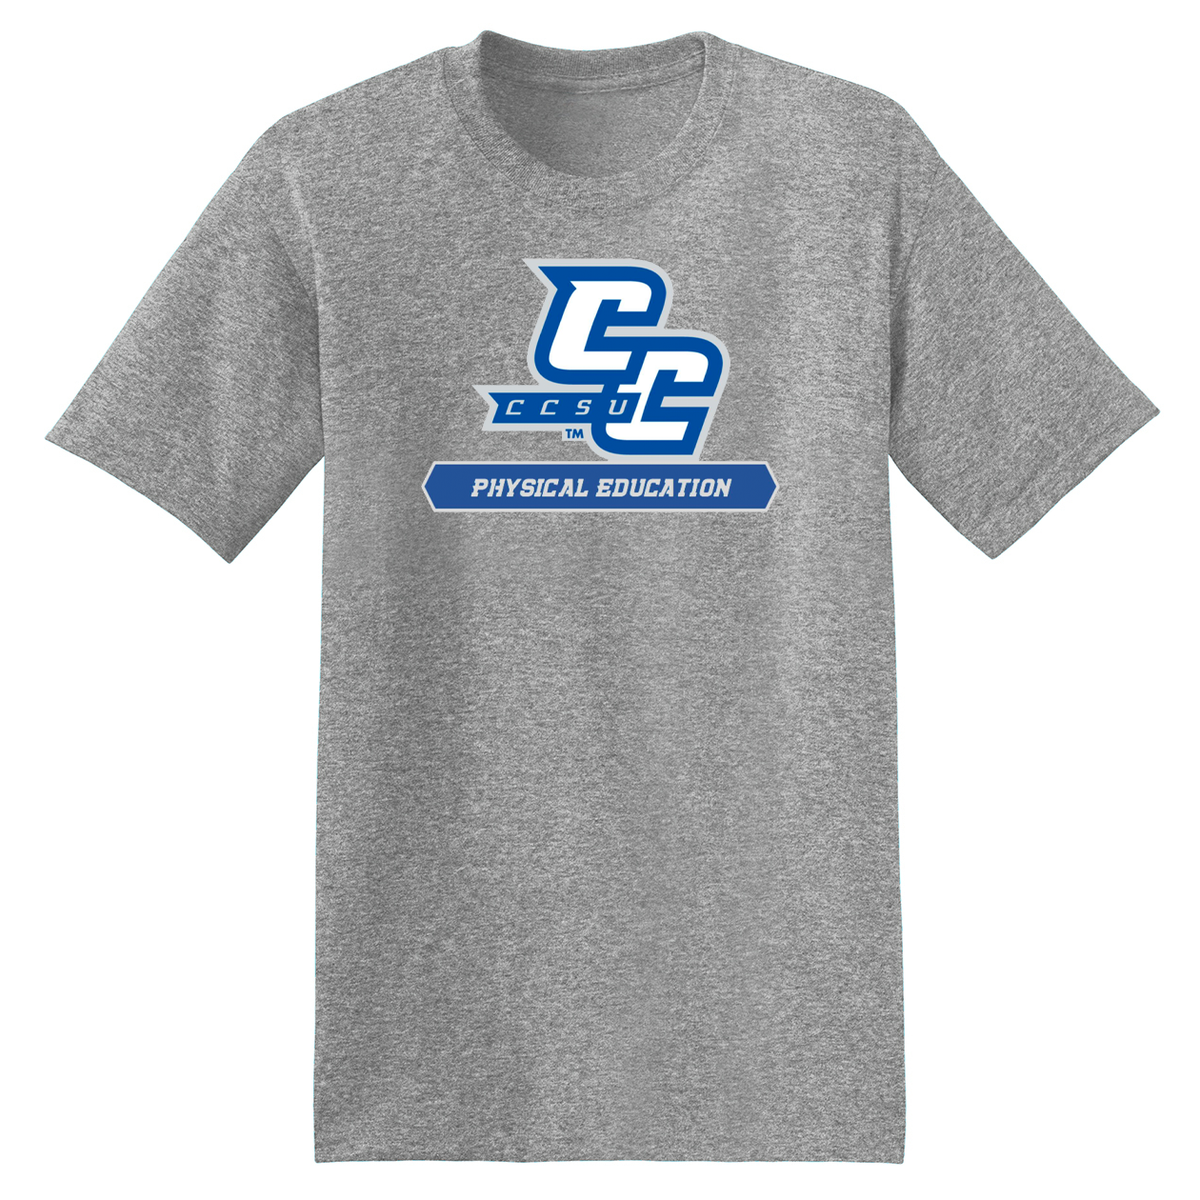 CCSU PE Club T-Shirt